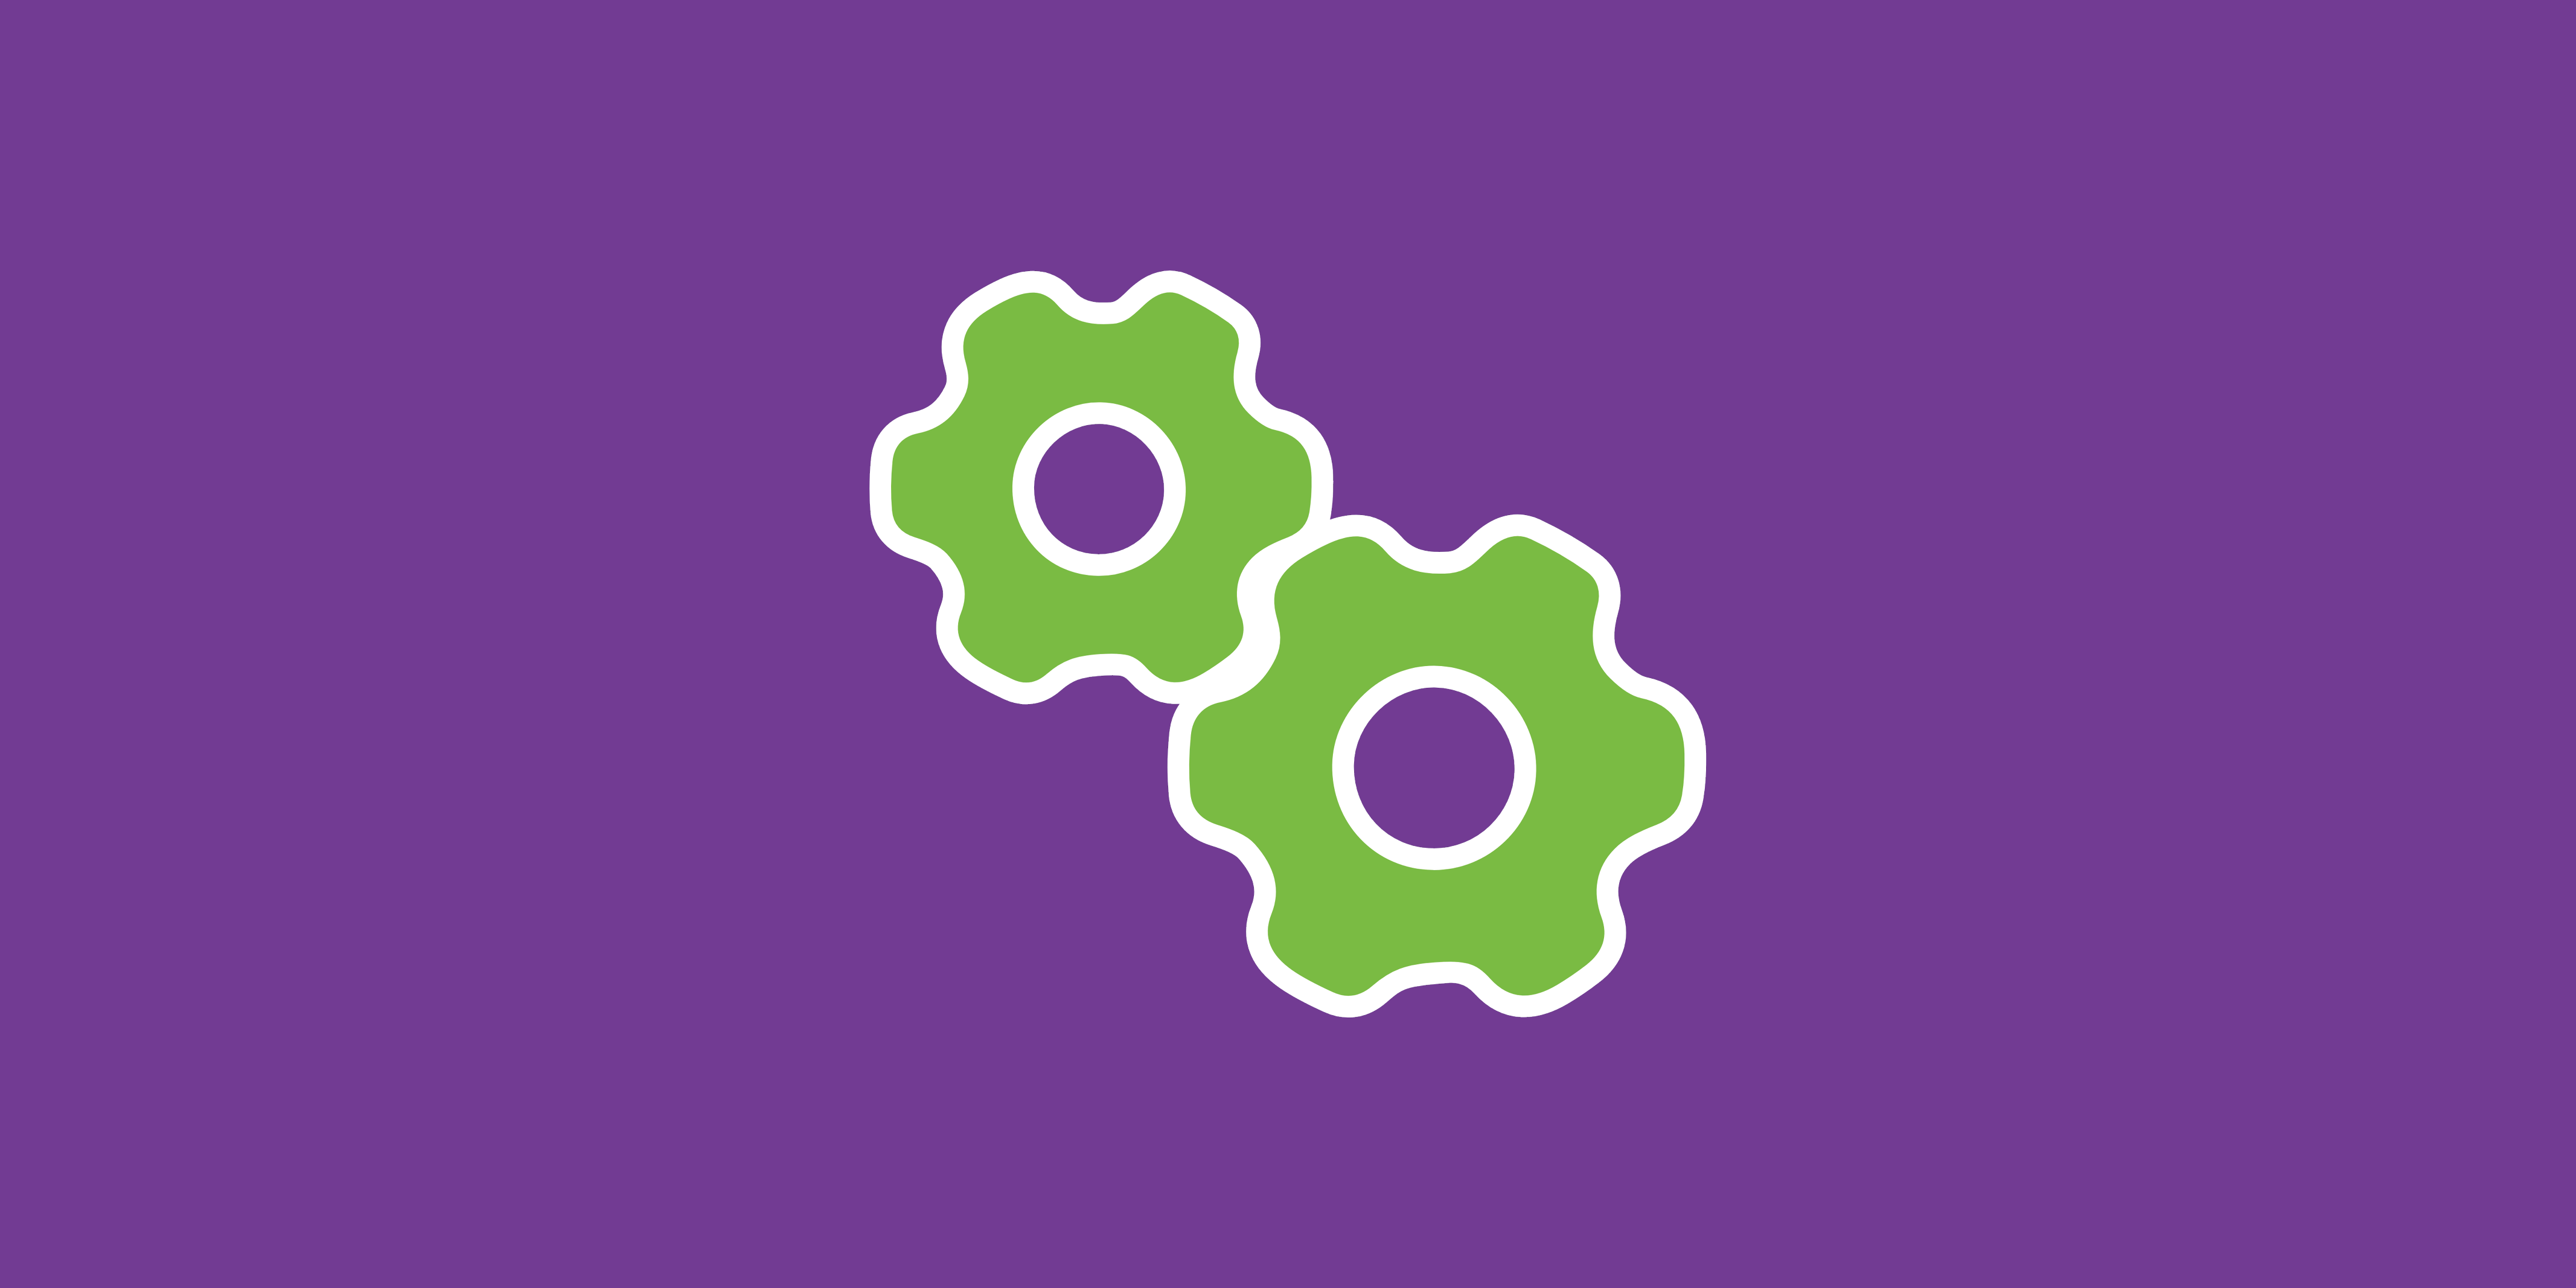 gears on a purple background